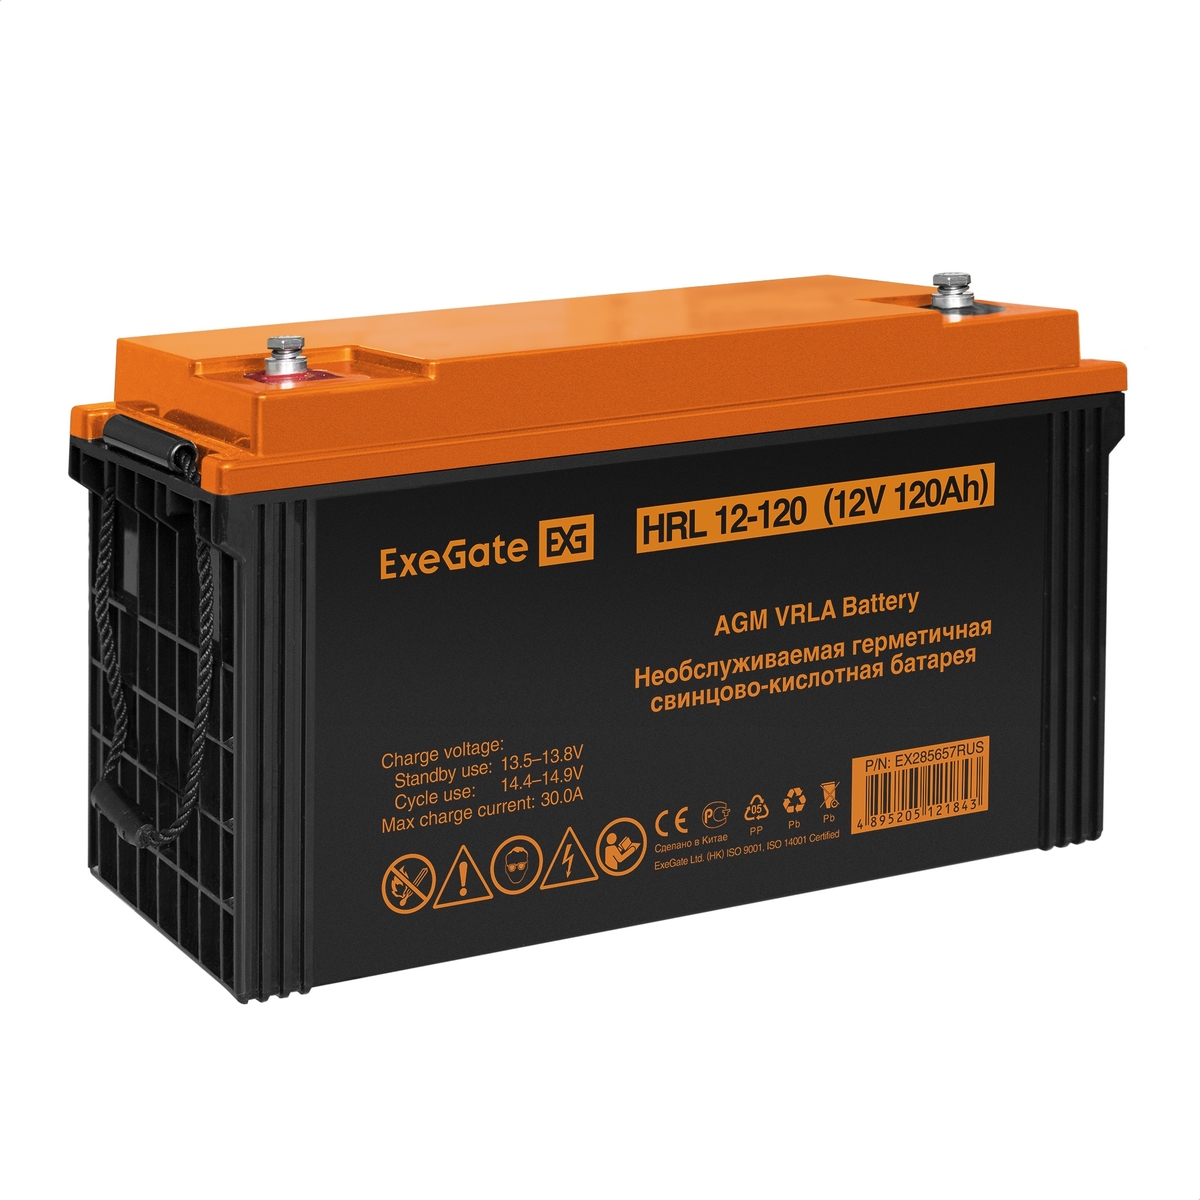 UPS set EX296004 + battery 120Ah EX285657 4 piece